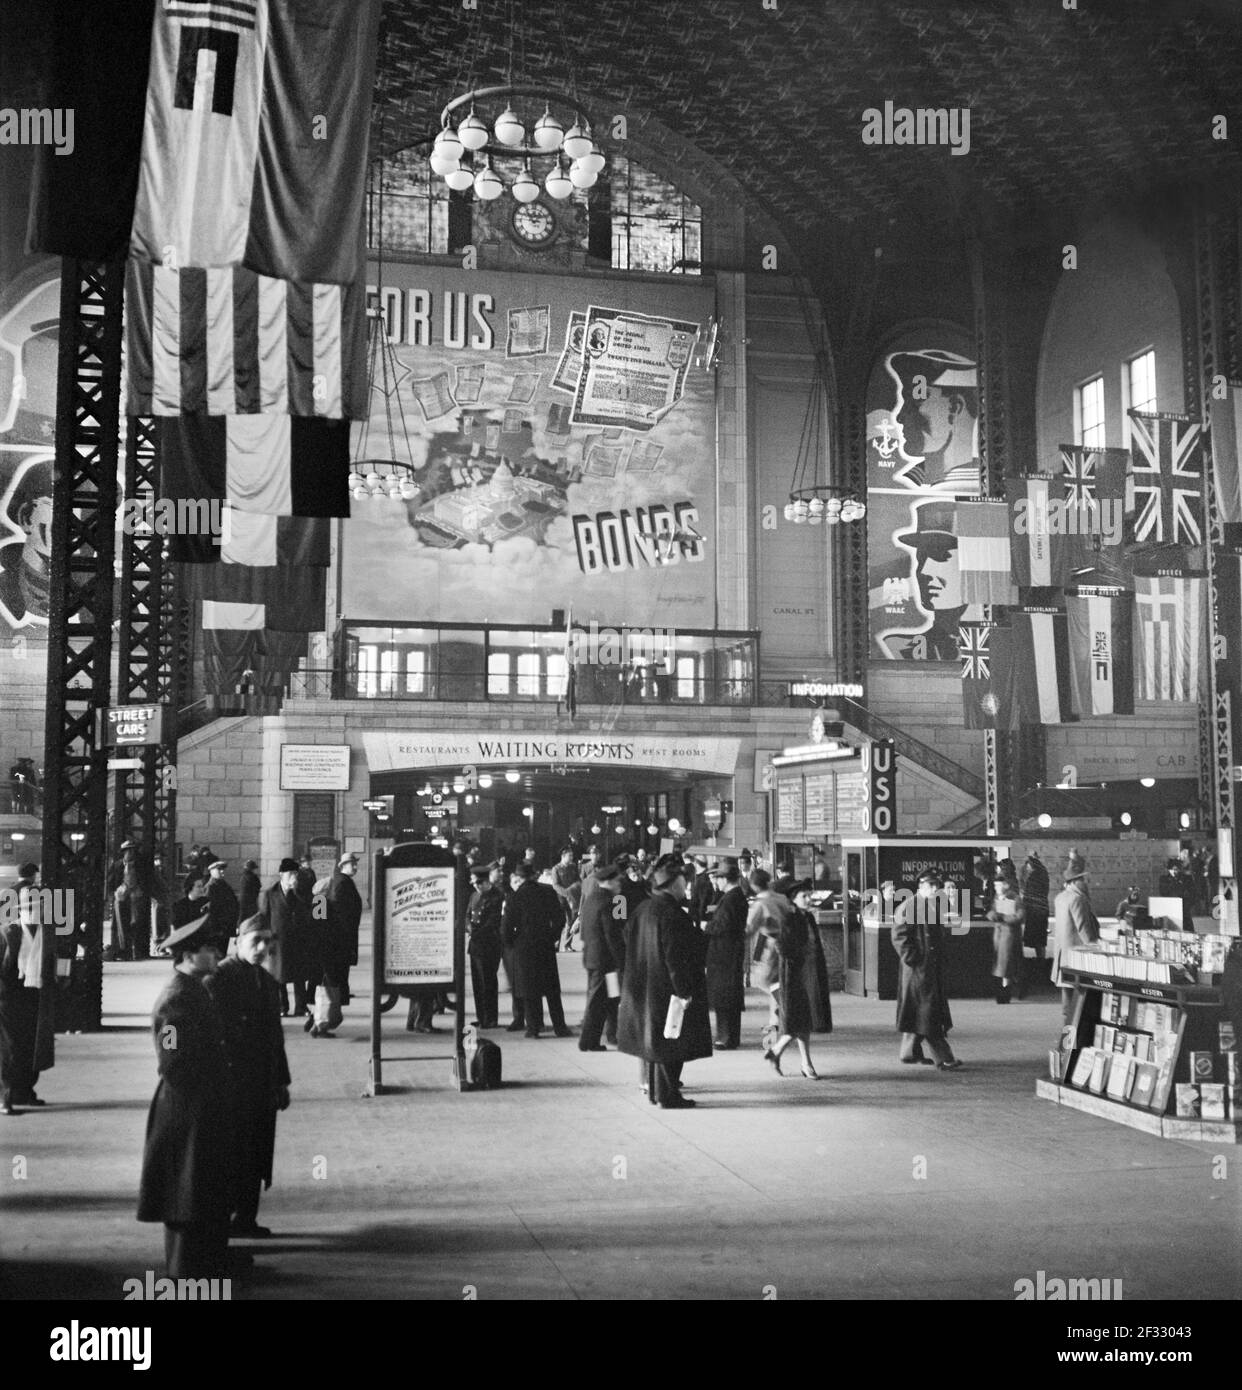 Concourse dei treni, Union Station, Chicago, Illinois, Stati Uniti, Jack Delano, US Office of War Information, gennaio 1943 Foto Stock